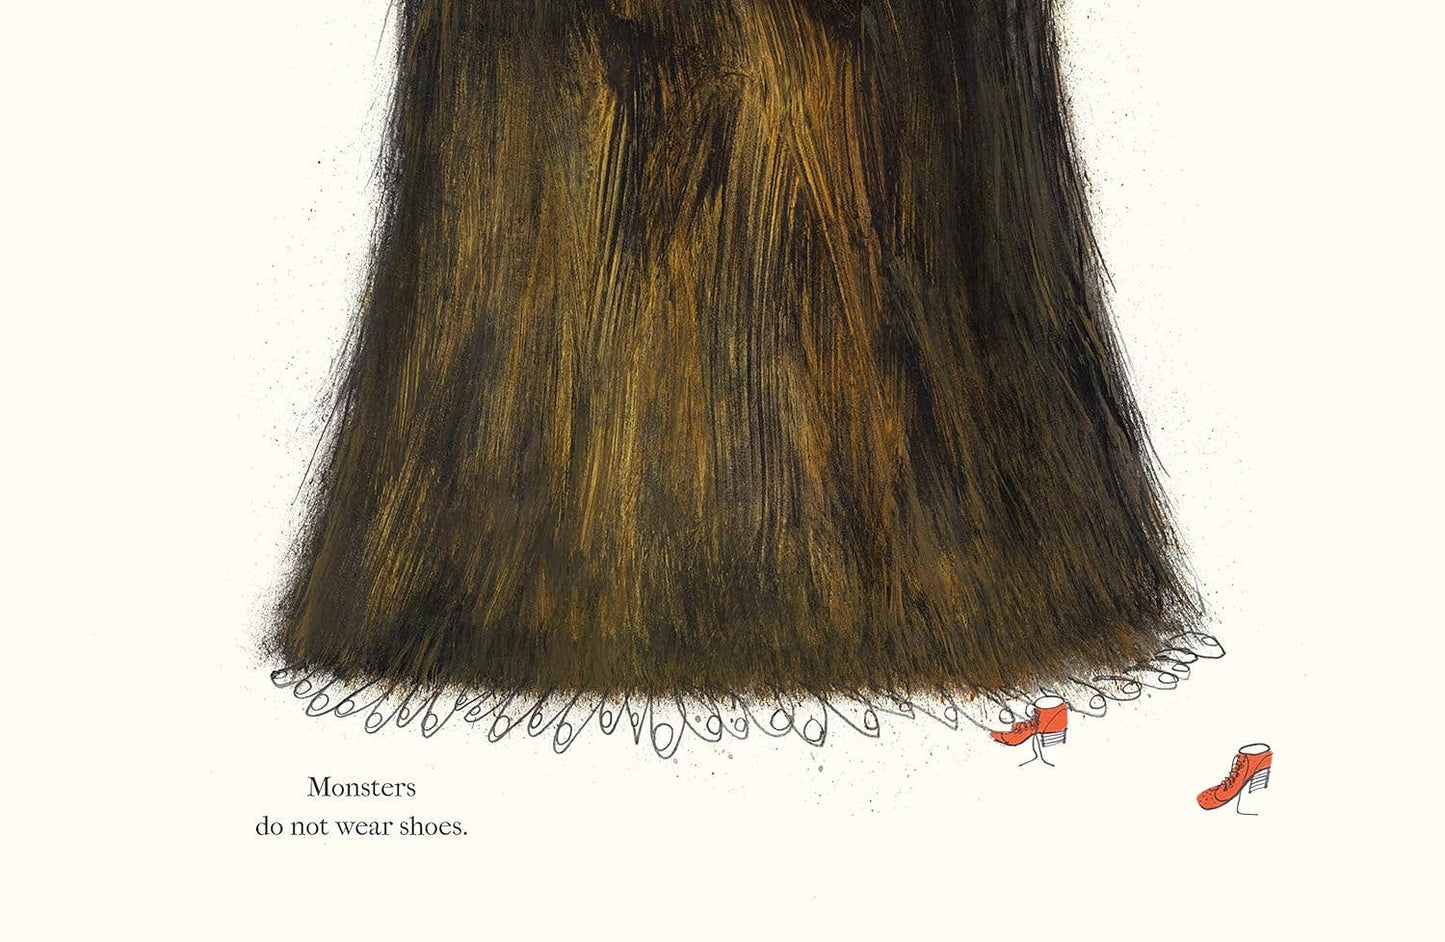 Monsters Never Get Haircuts by Marie-Hélène Versini